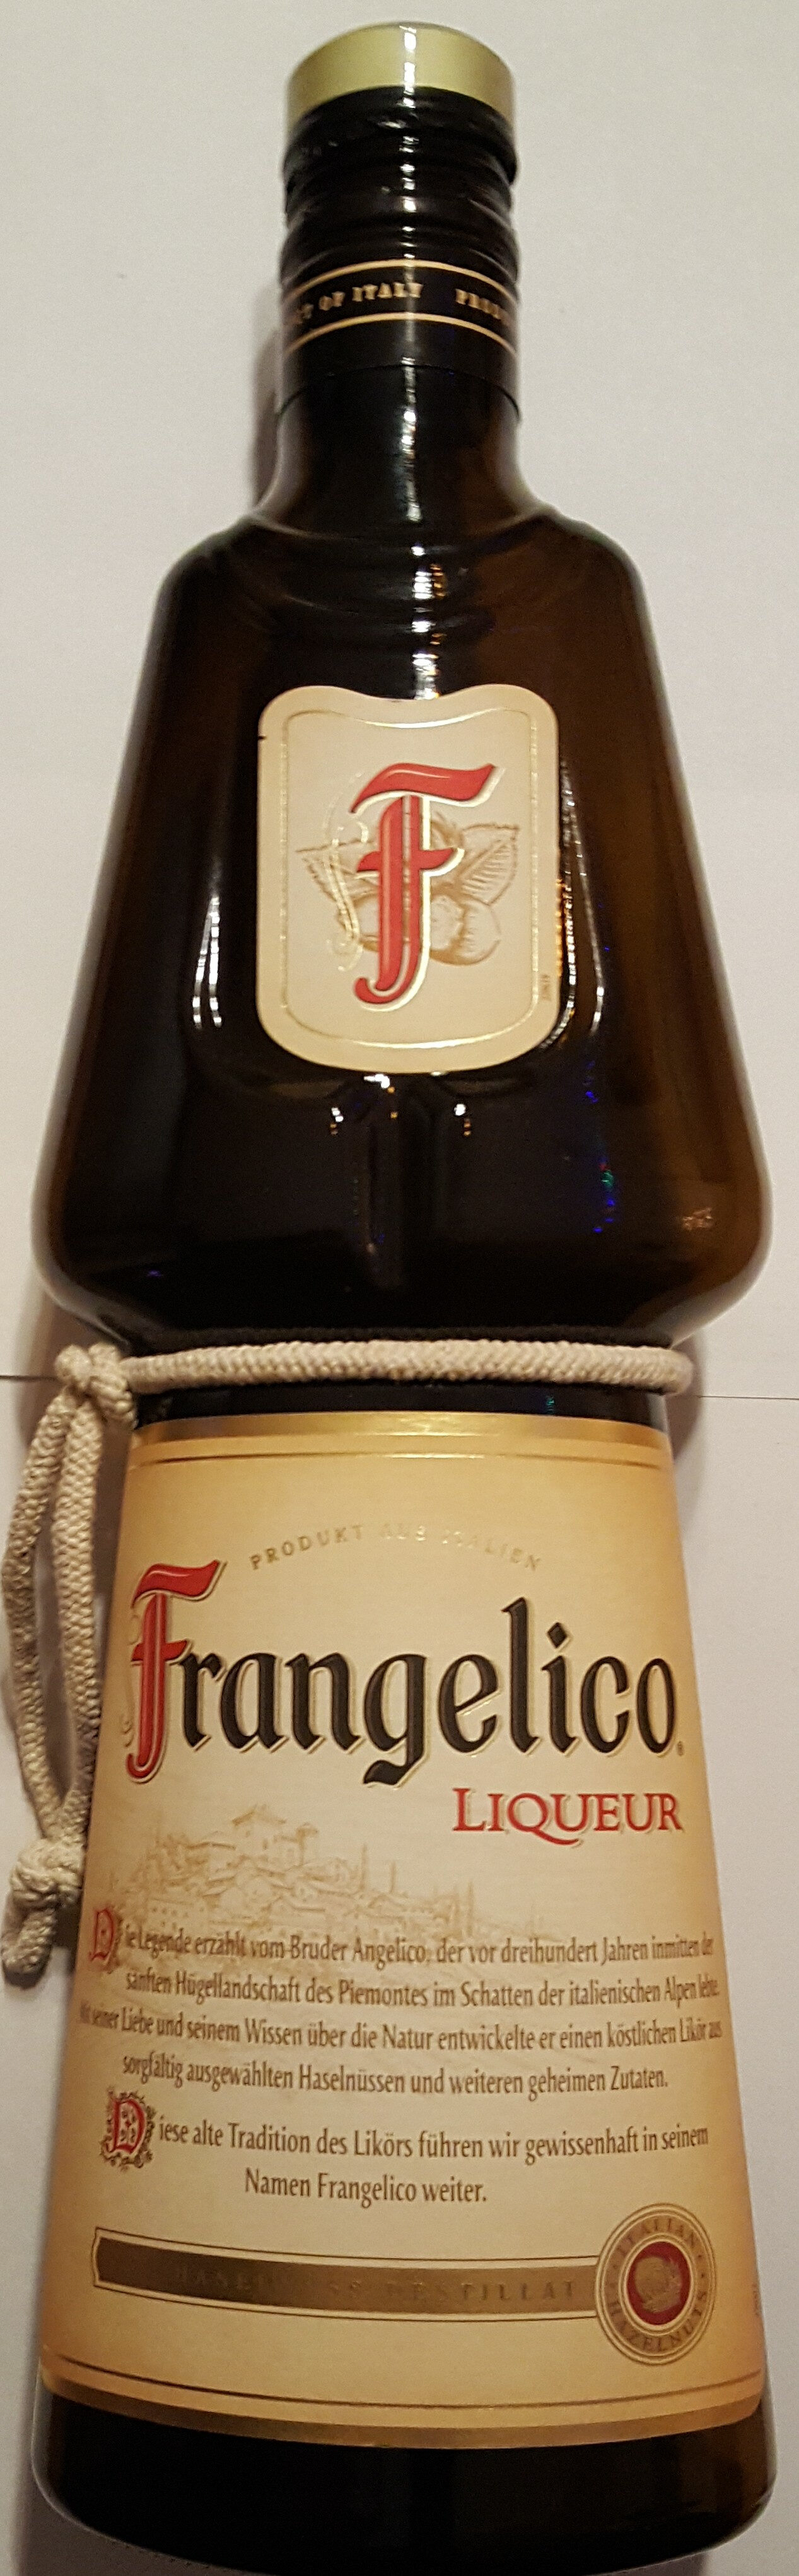 frangelico - Product